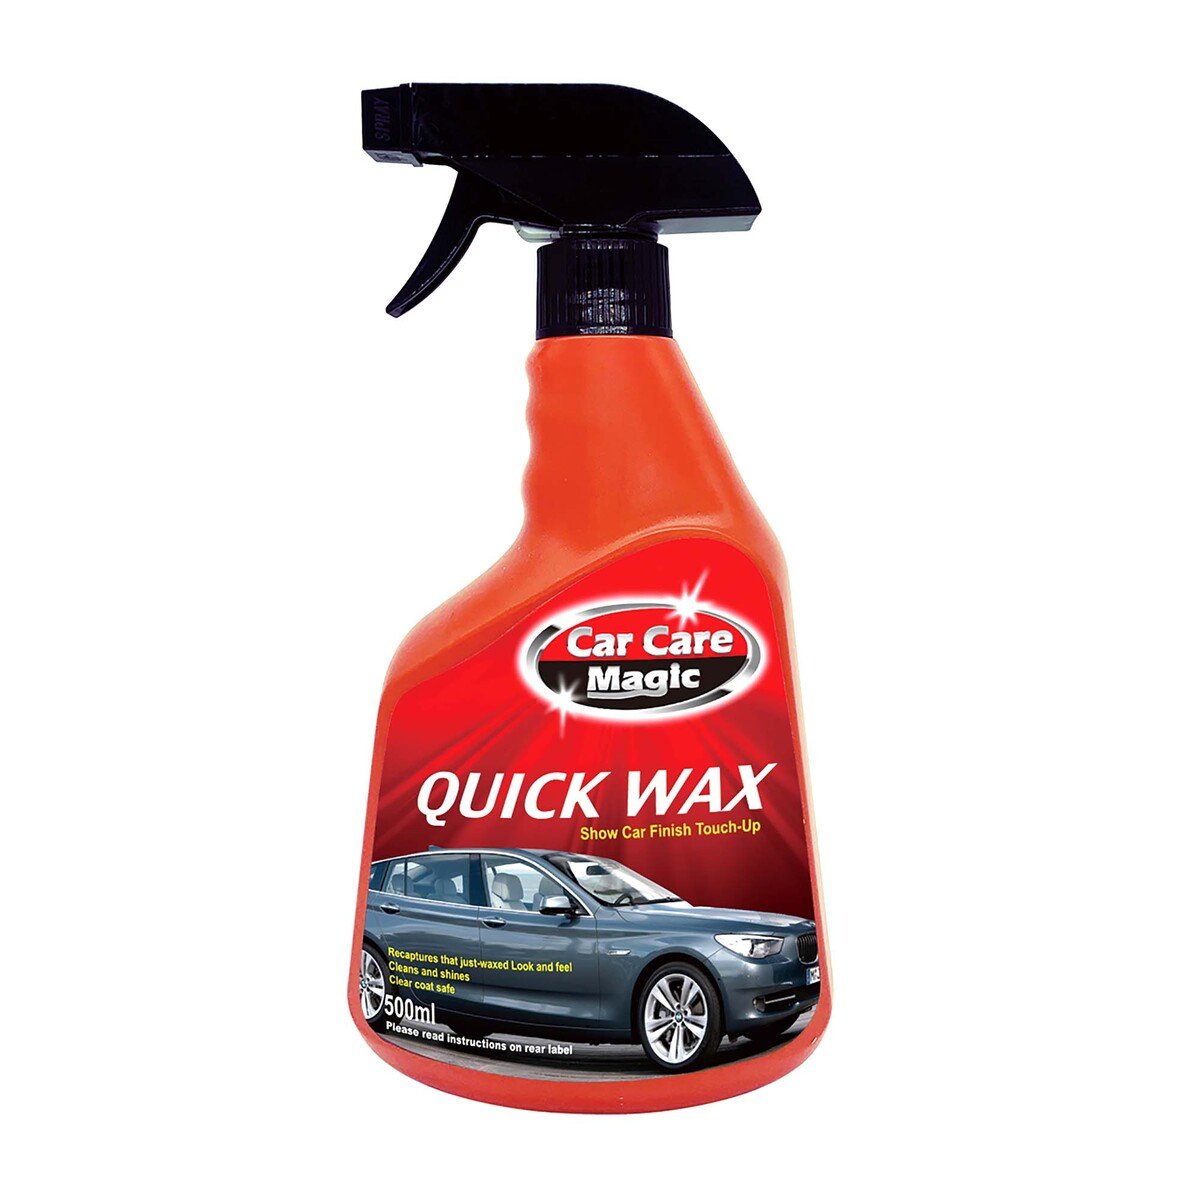 Car Care Magic Quick Wax, 500ml, QW-500